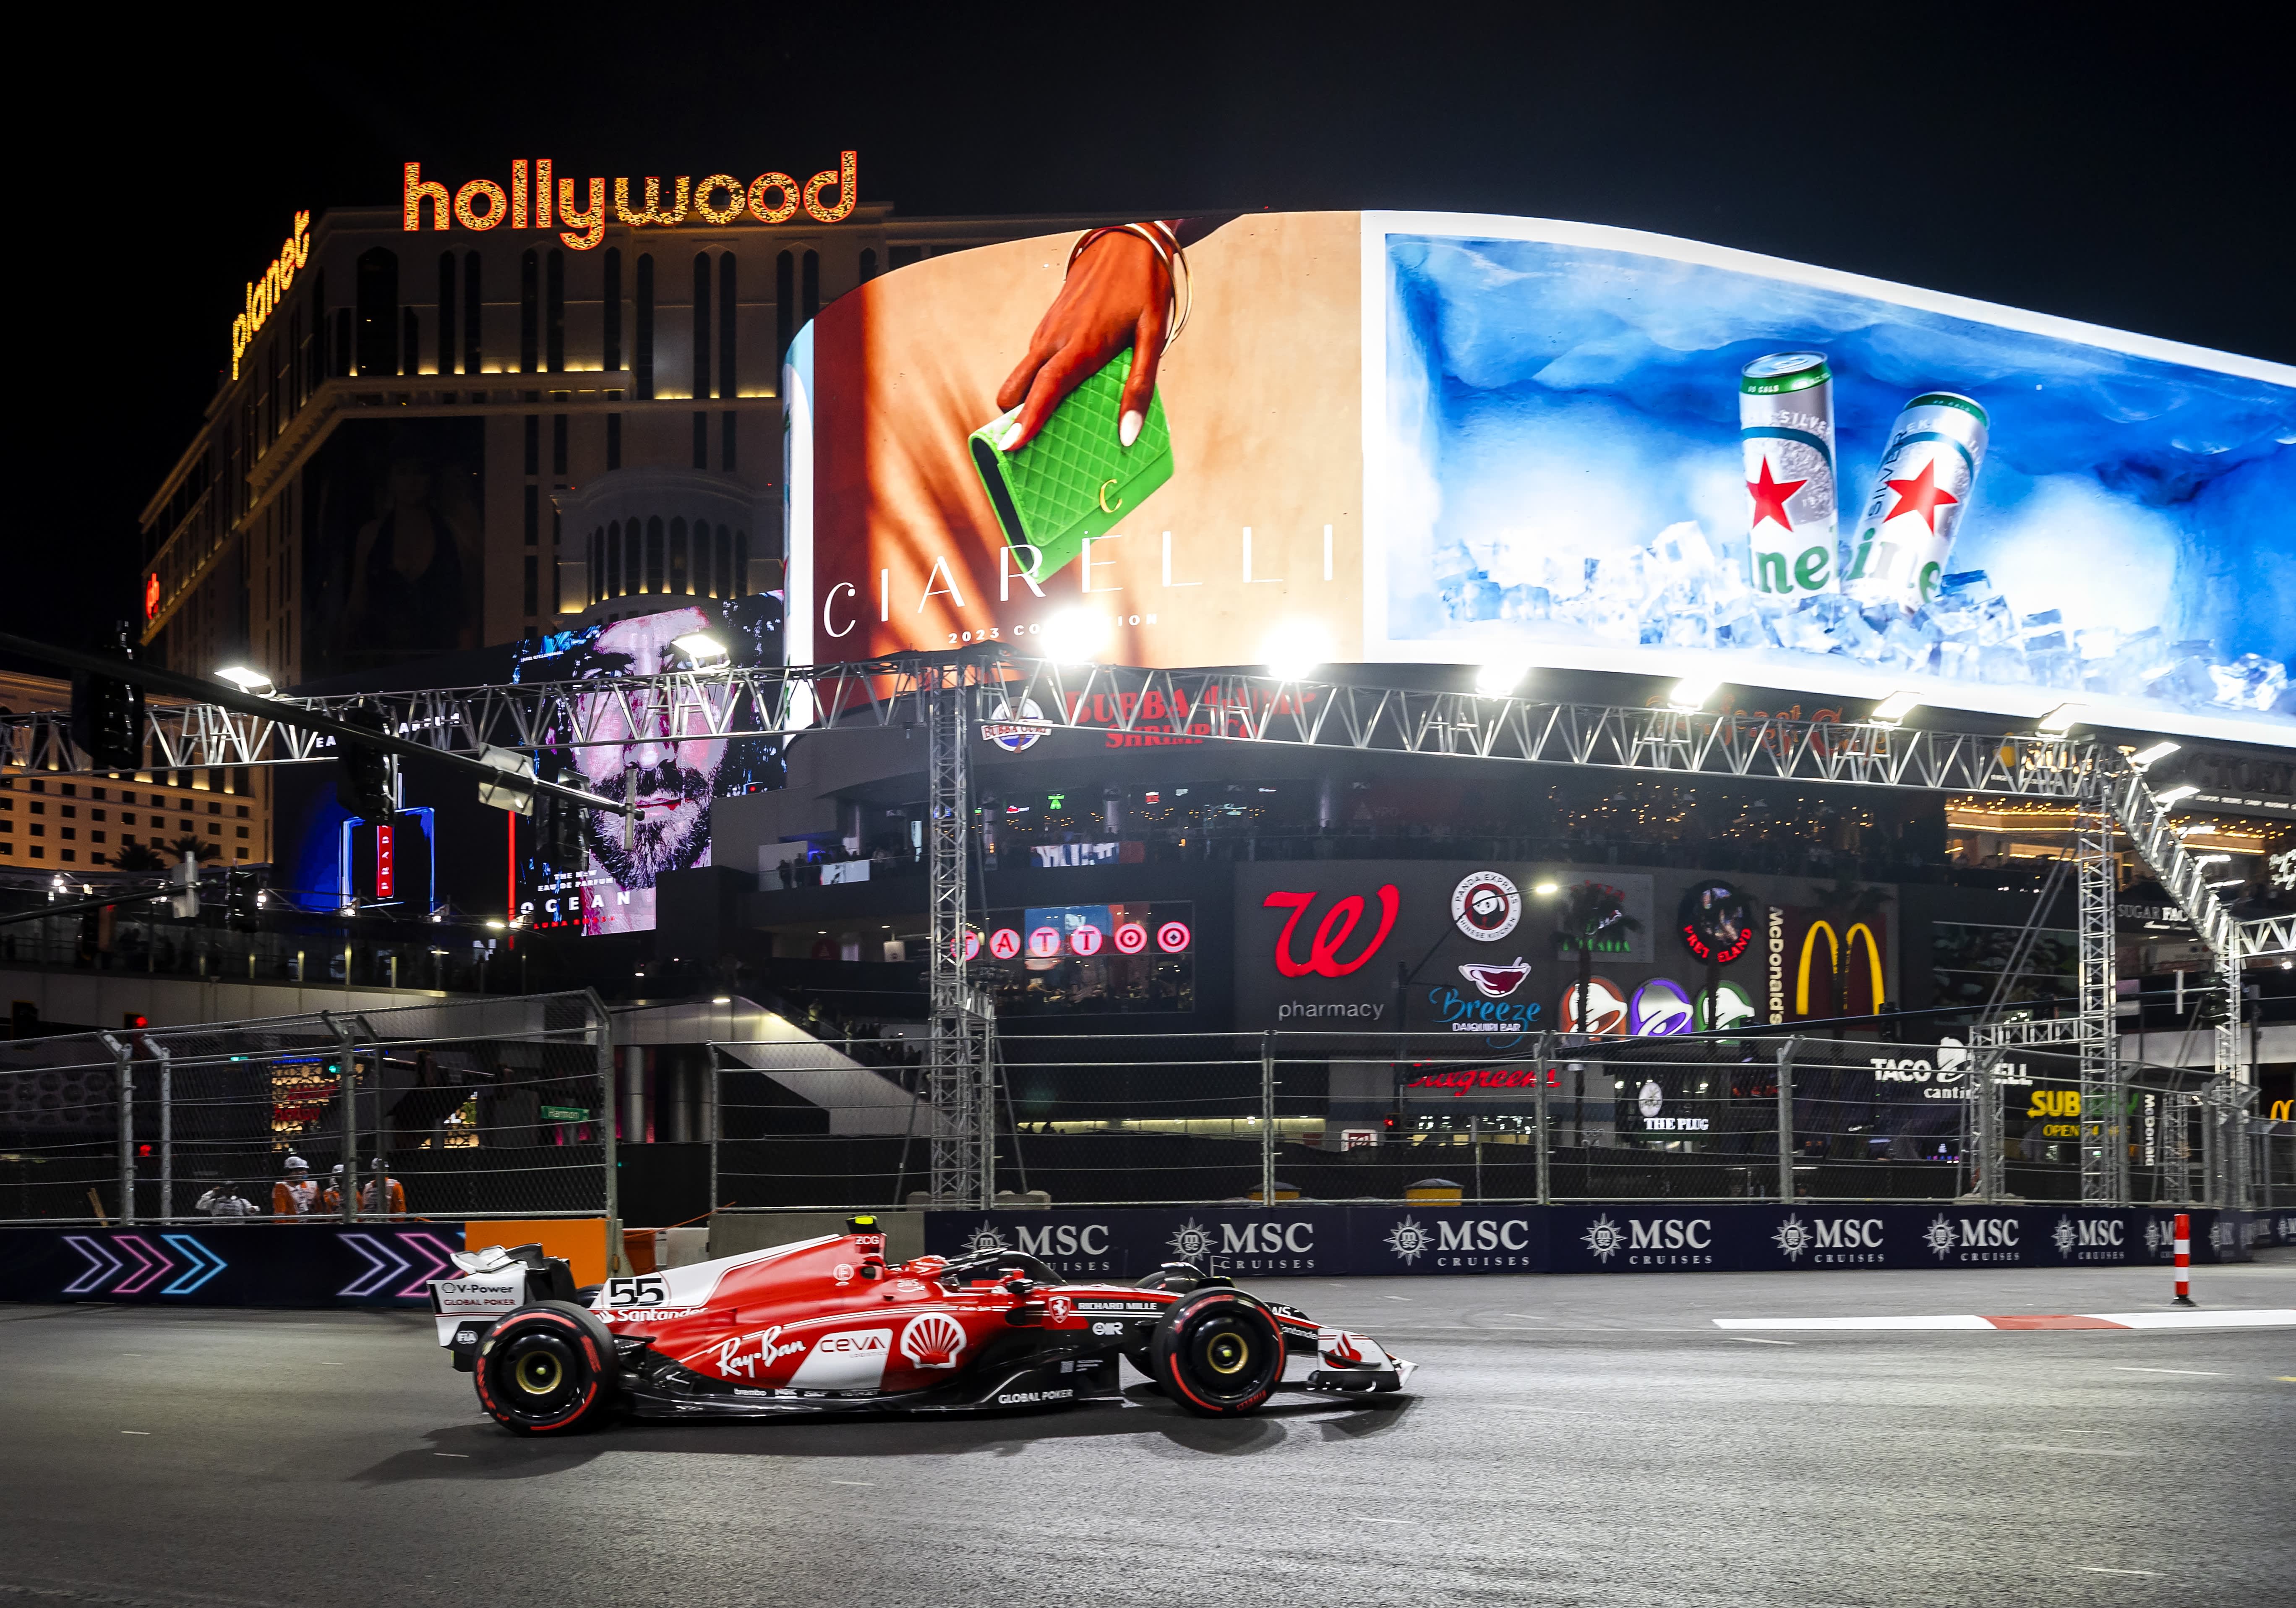 F1 Las Vegas practice canceled cover car after broken drain damages